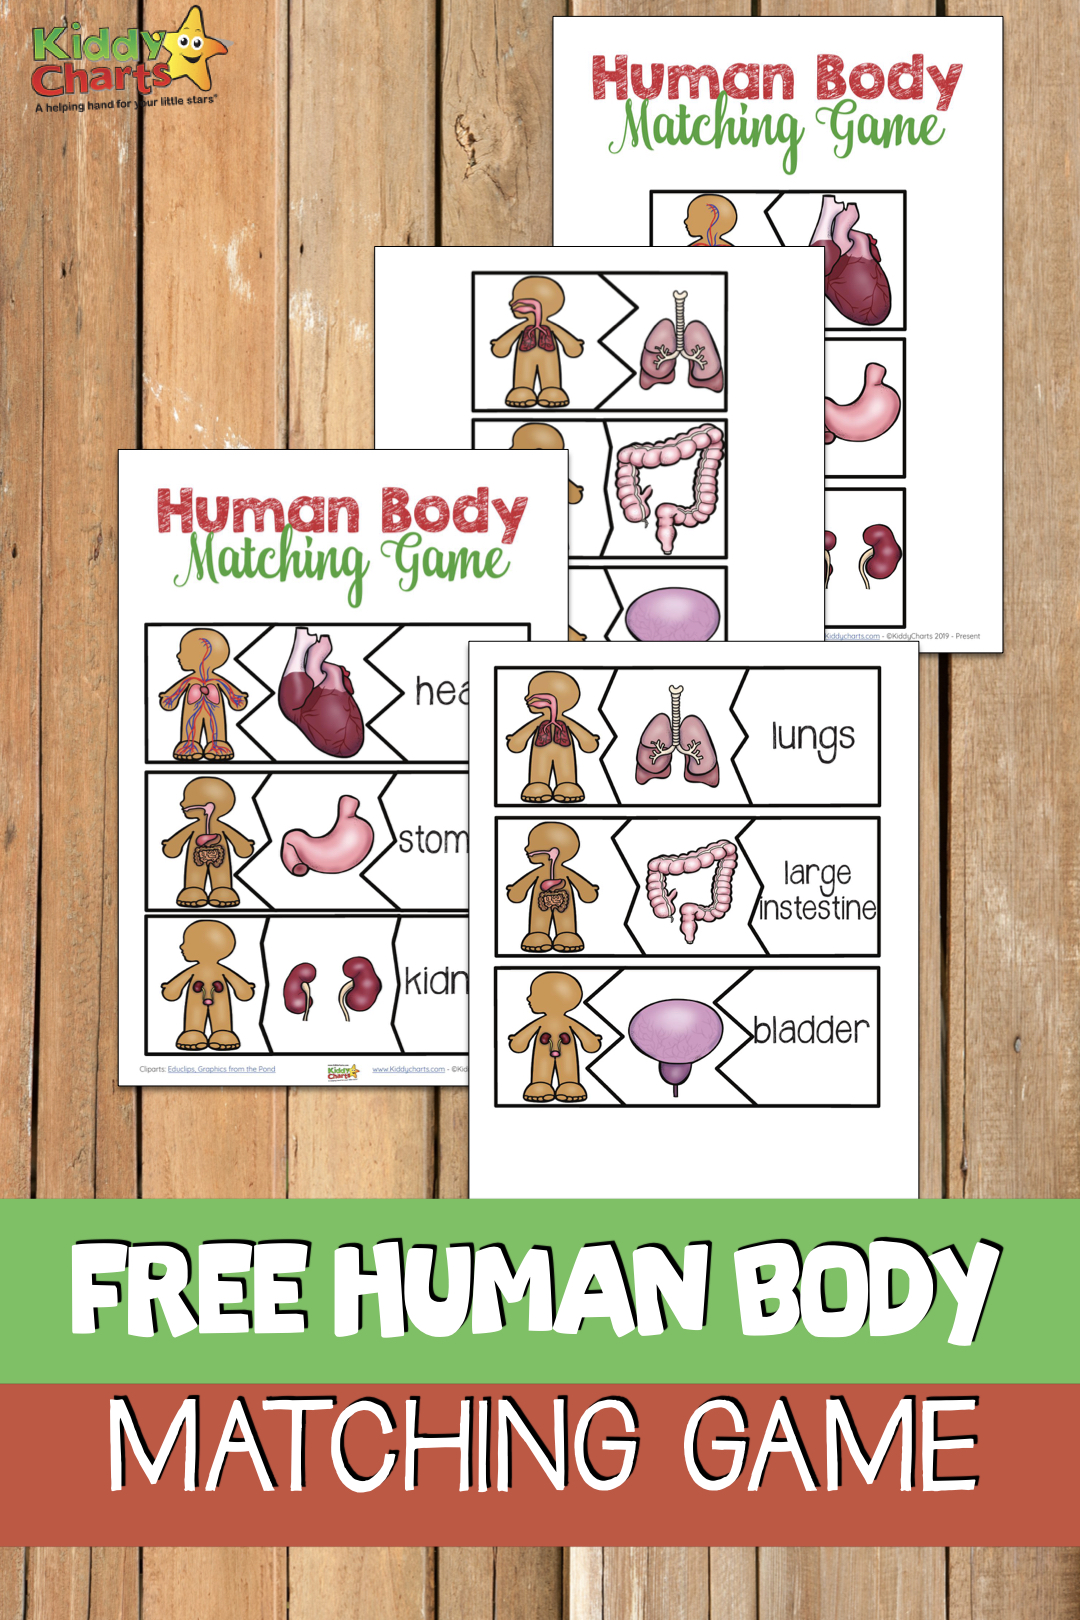 Large image of human body matching game sheet examples.